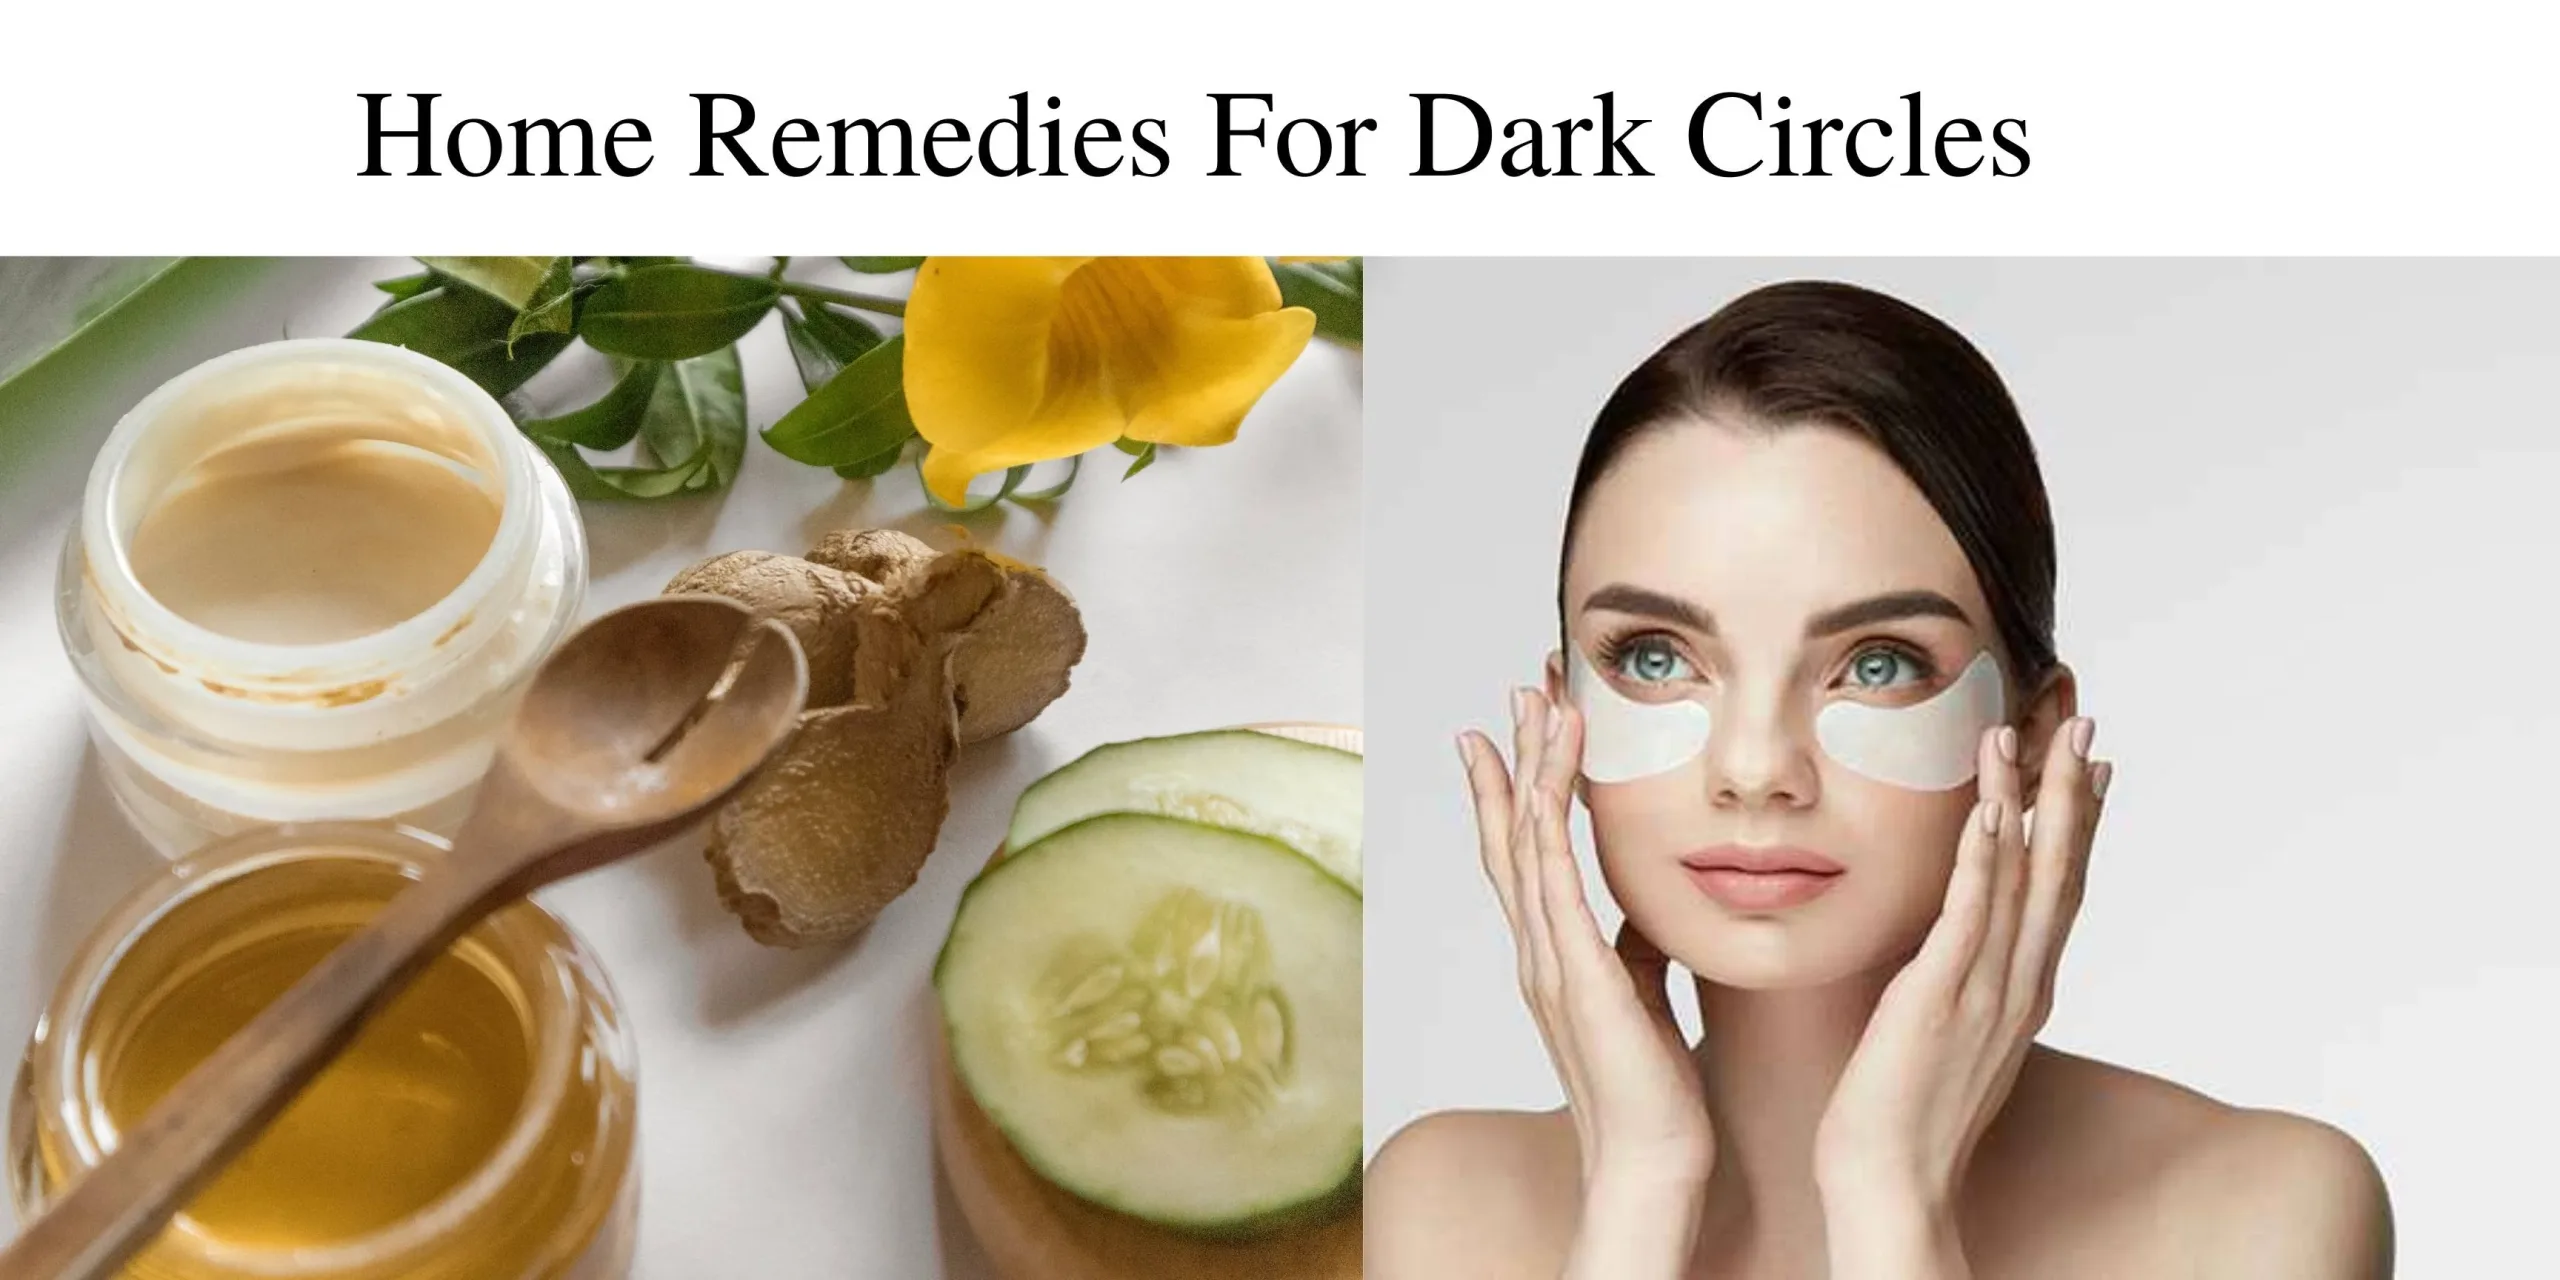 How to get rid of dark circles